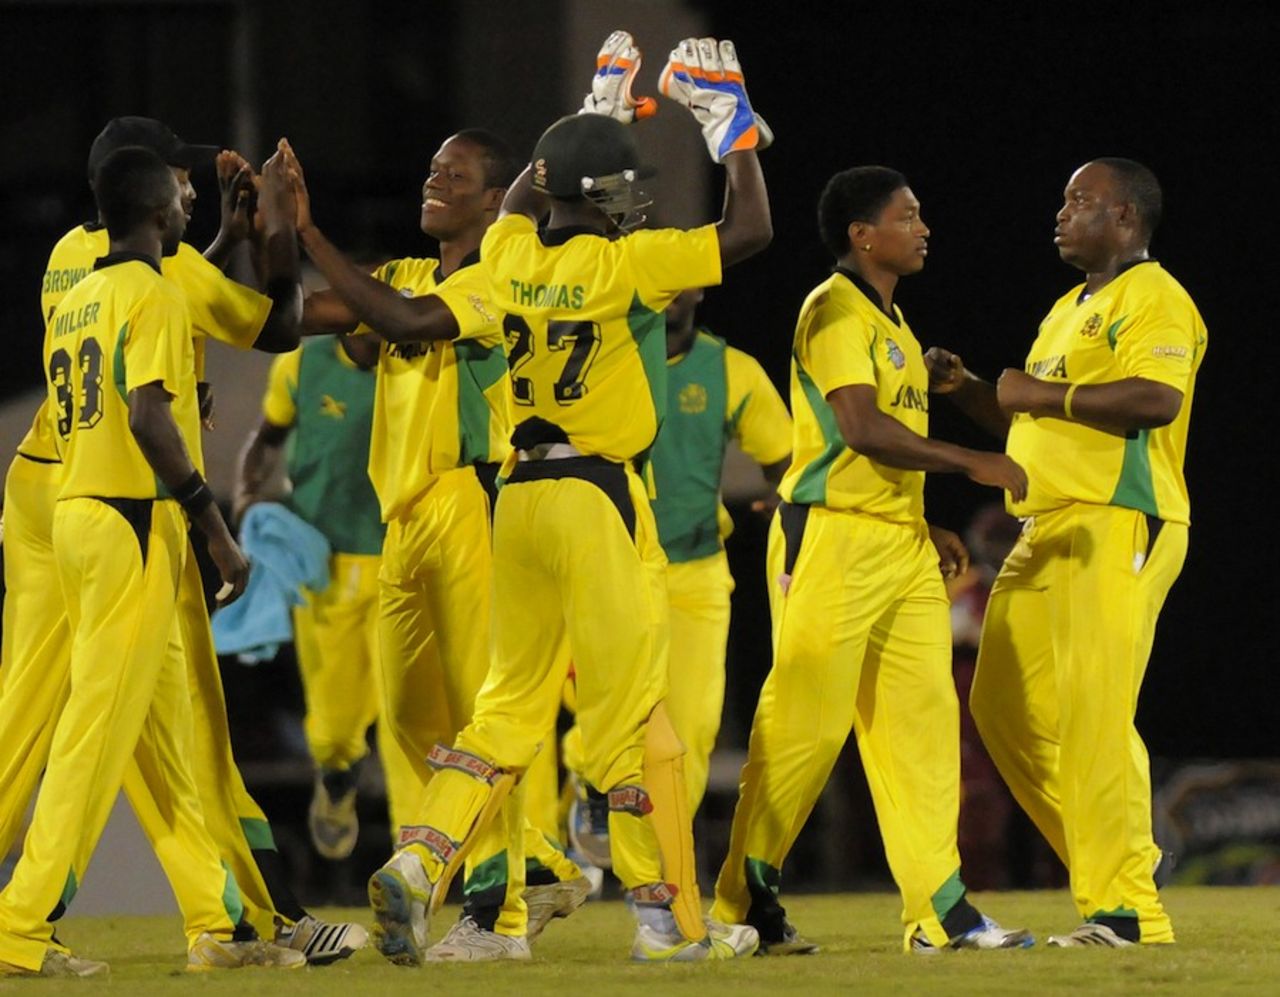 Jamaica's players celebrate a wicket, Jamaica v Leeward Islands, Caribbean T20, January 11, 2013